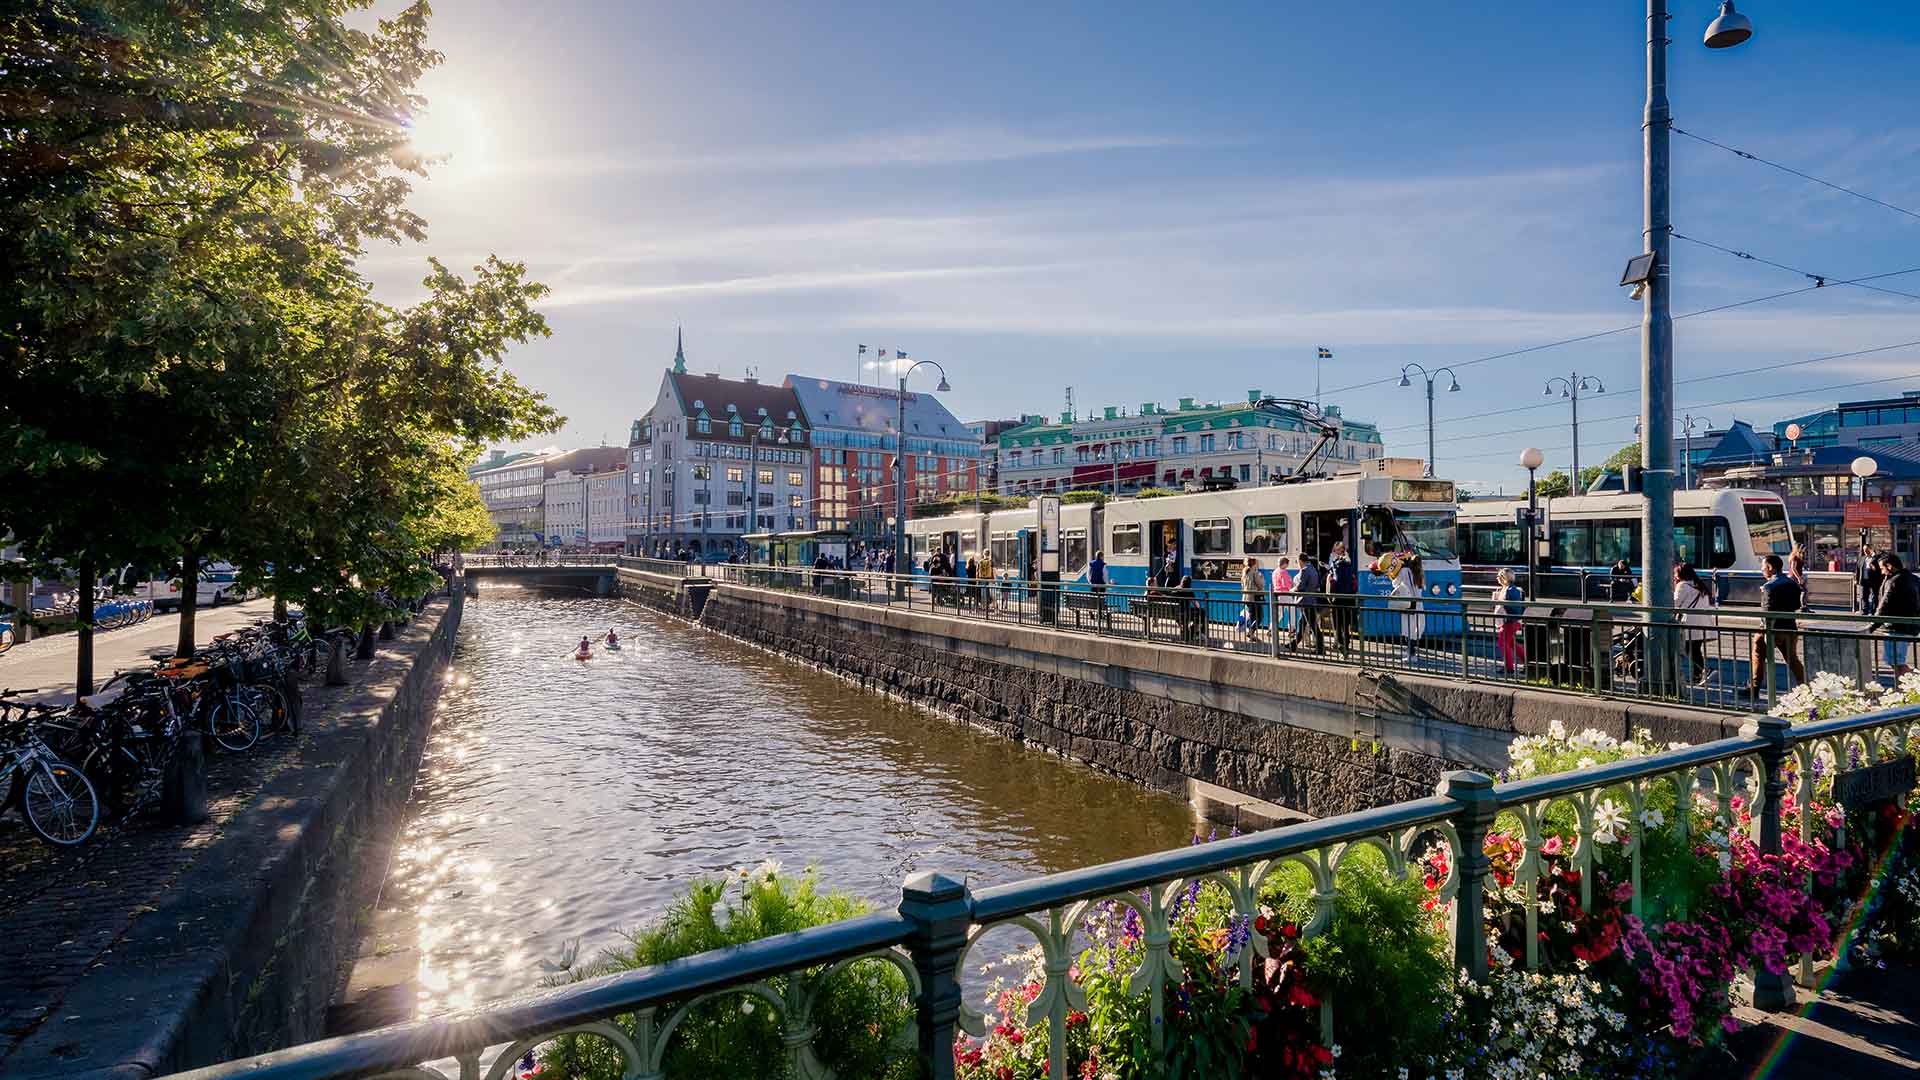 Queens Square in Gothenburg, Sweden